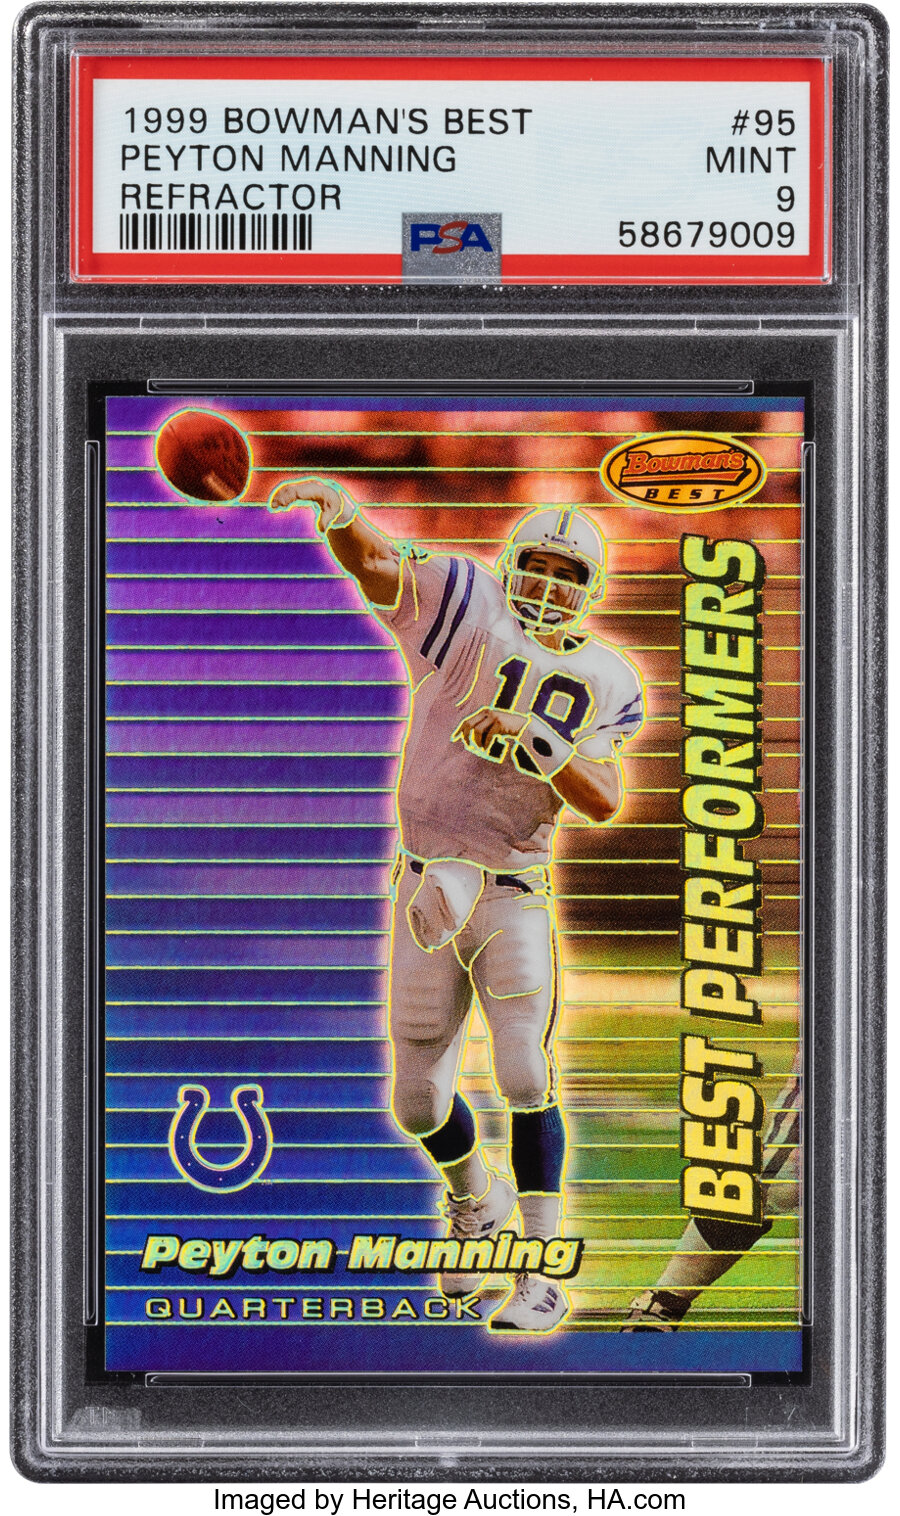 1999 Bowman's Best Peyton Manning (Refractor) #95 PSA Mint 9 - #'d 54/400